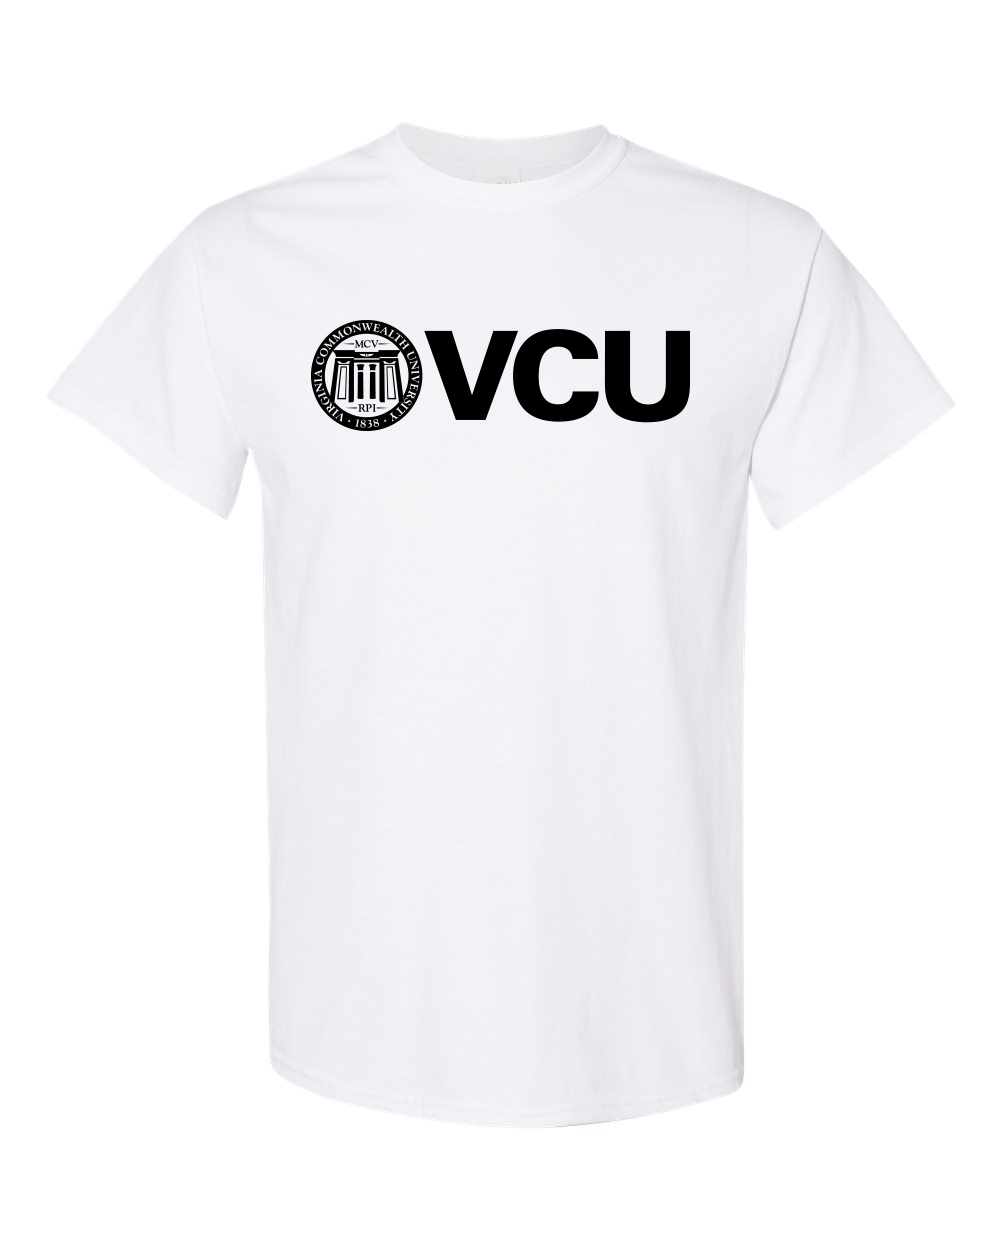 VCU White Seal Tee - Virginia Book Company